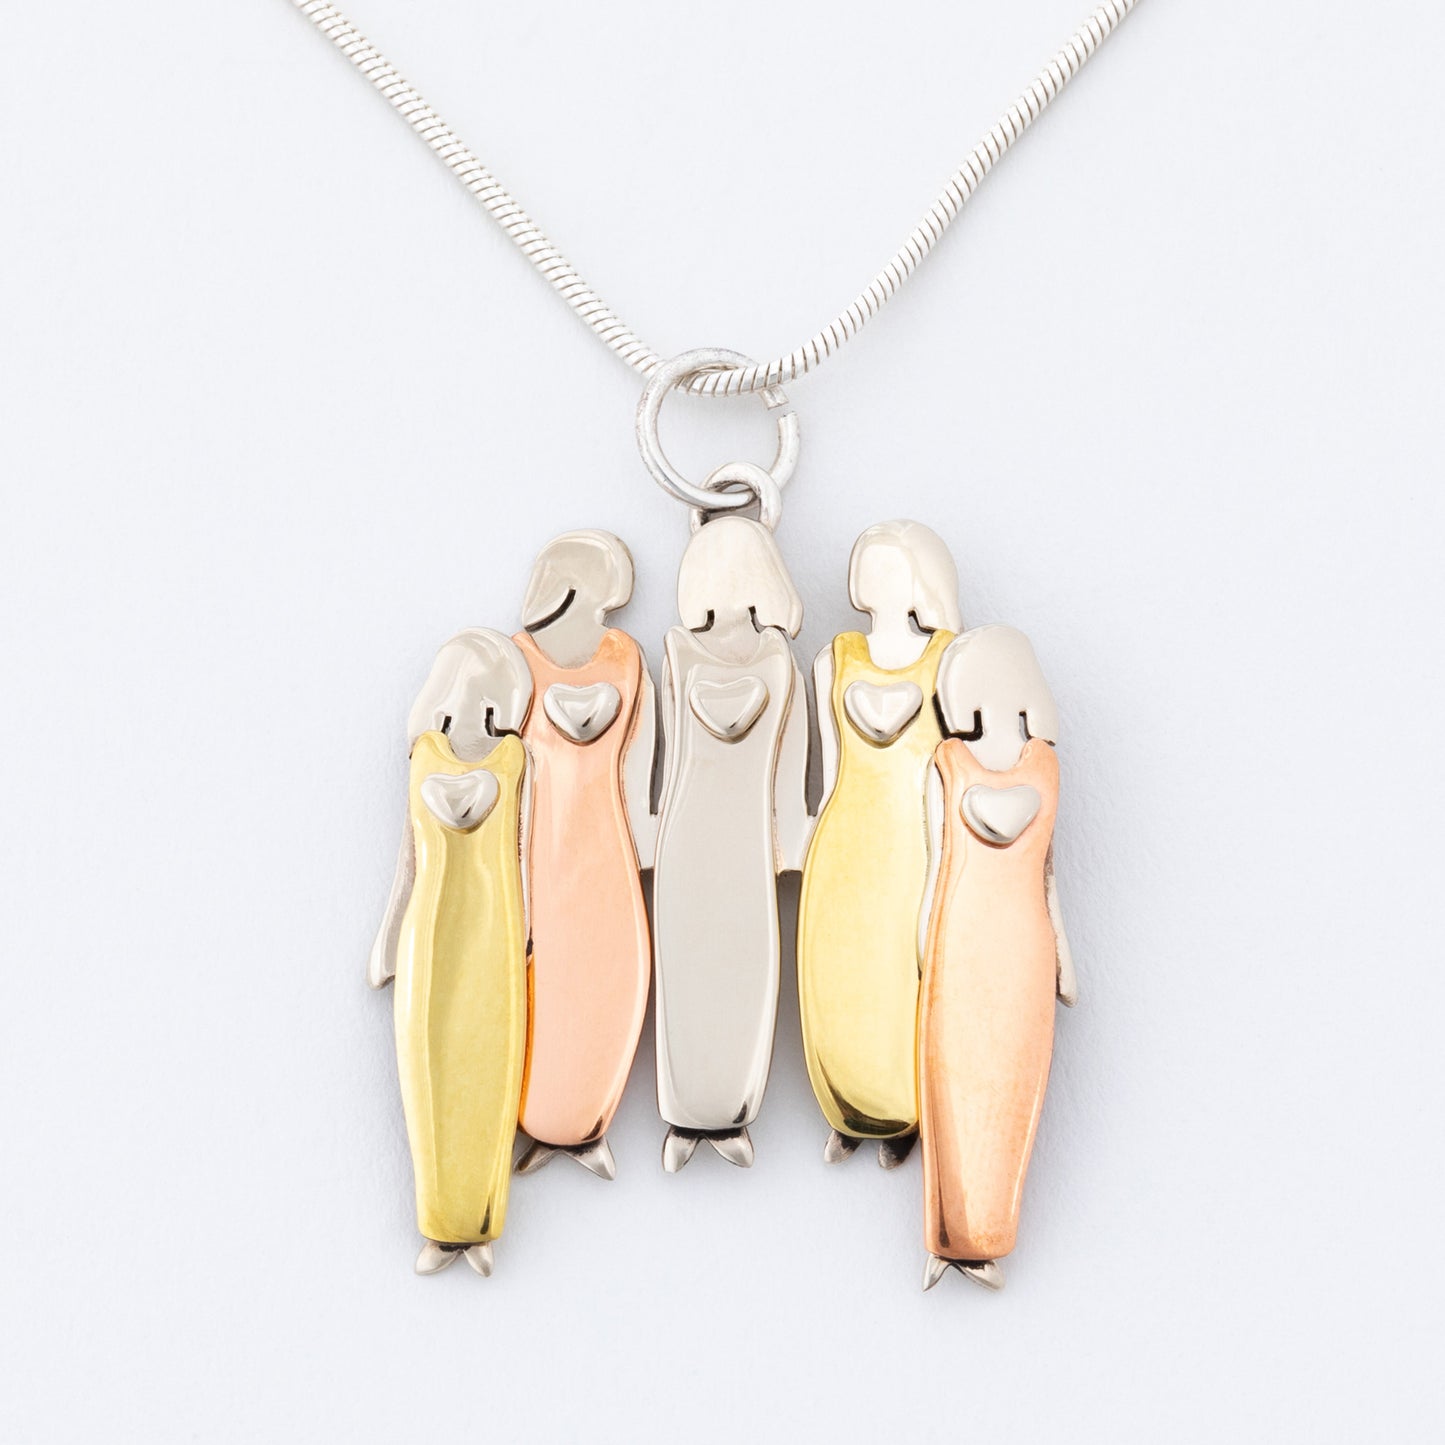 Bond Between Sisters Necklace | Handmade, Fair Trade